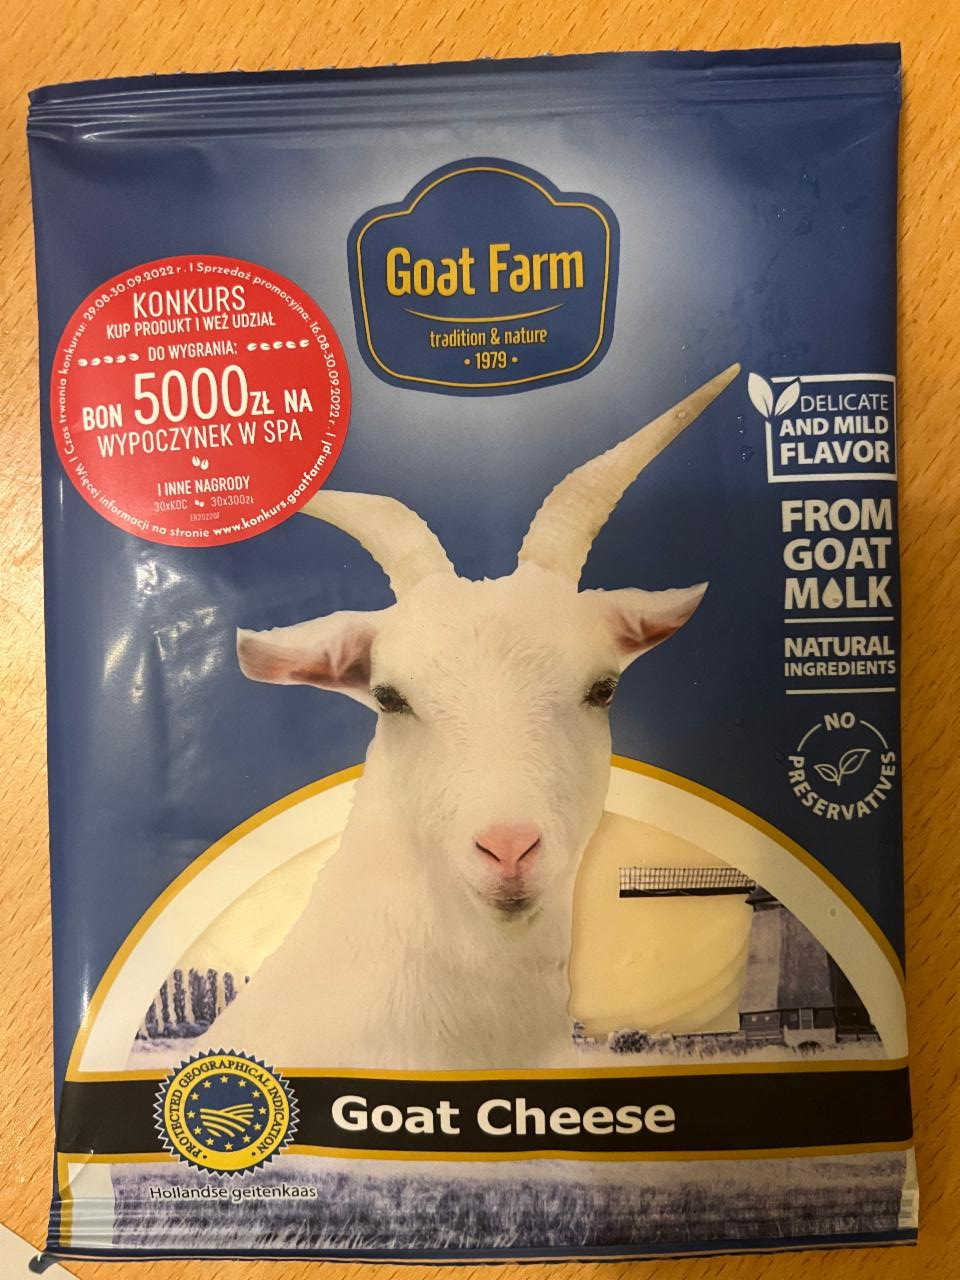 Zdjęcia - Goat Farm Ser kozi 200 g